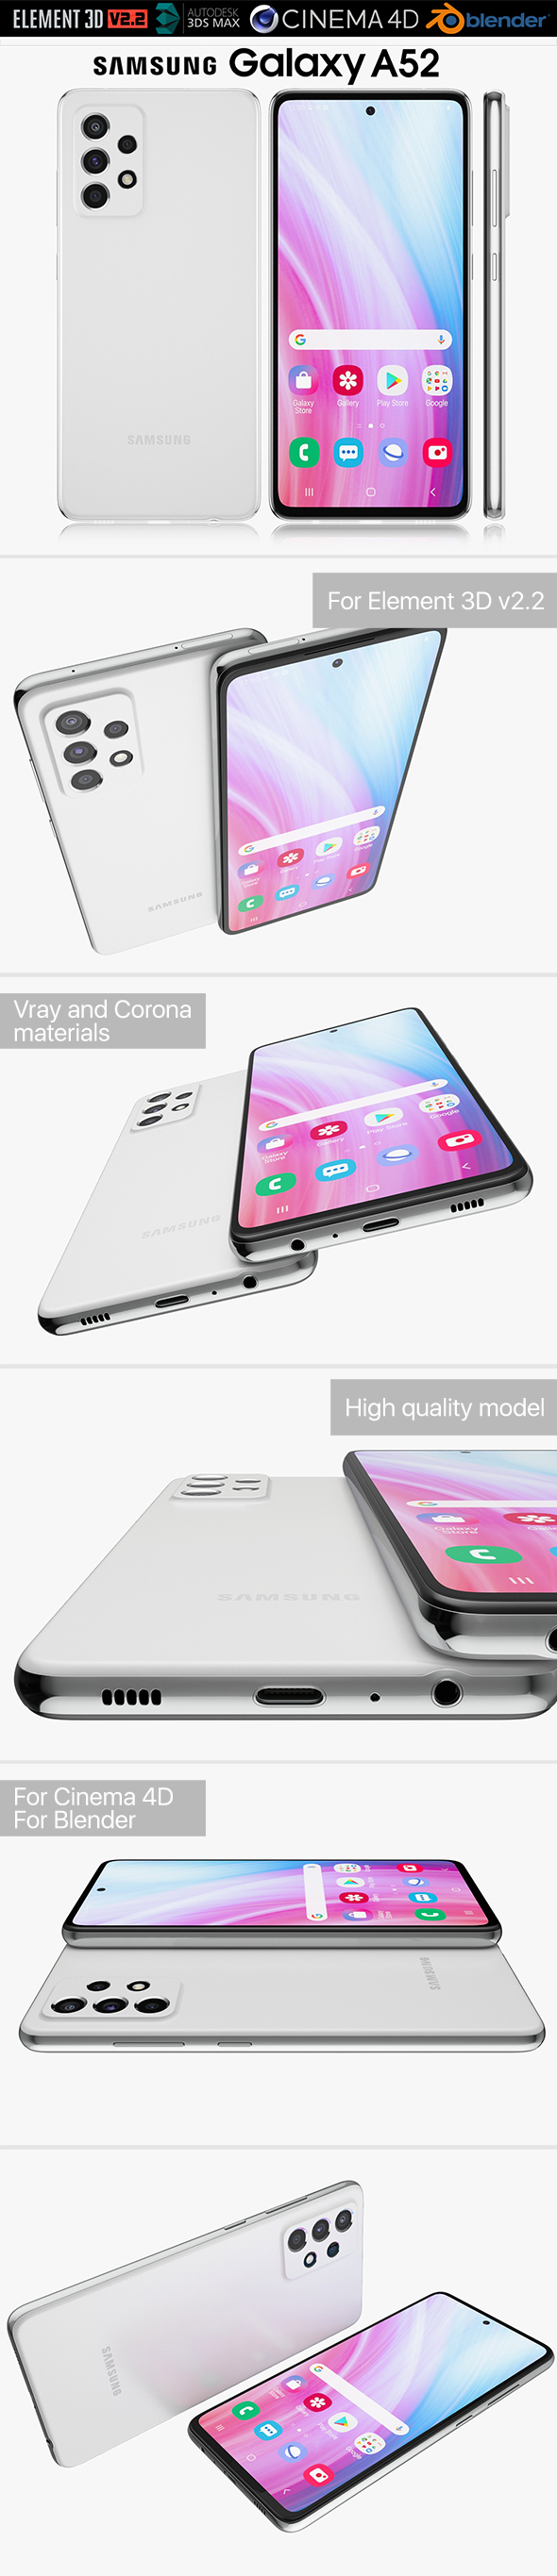 Samsung Galaxy A52 - 3Docean 30668704